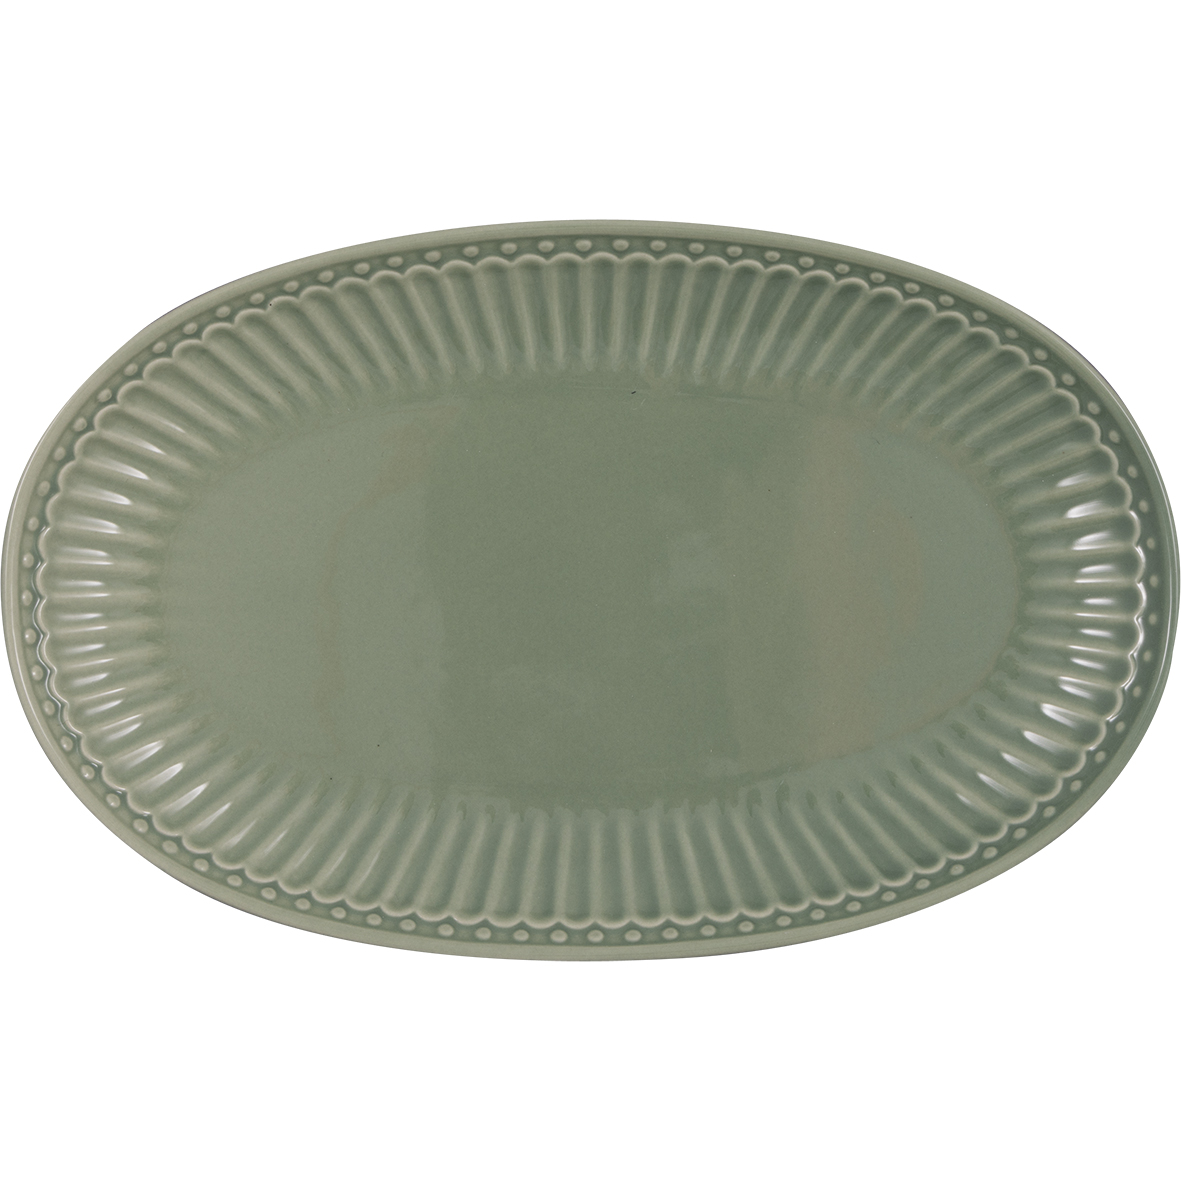 Greengate ovaler Teller/Servierplatte Bisquit plate Alice dusty green